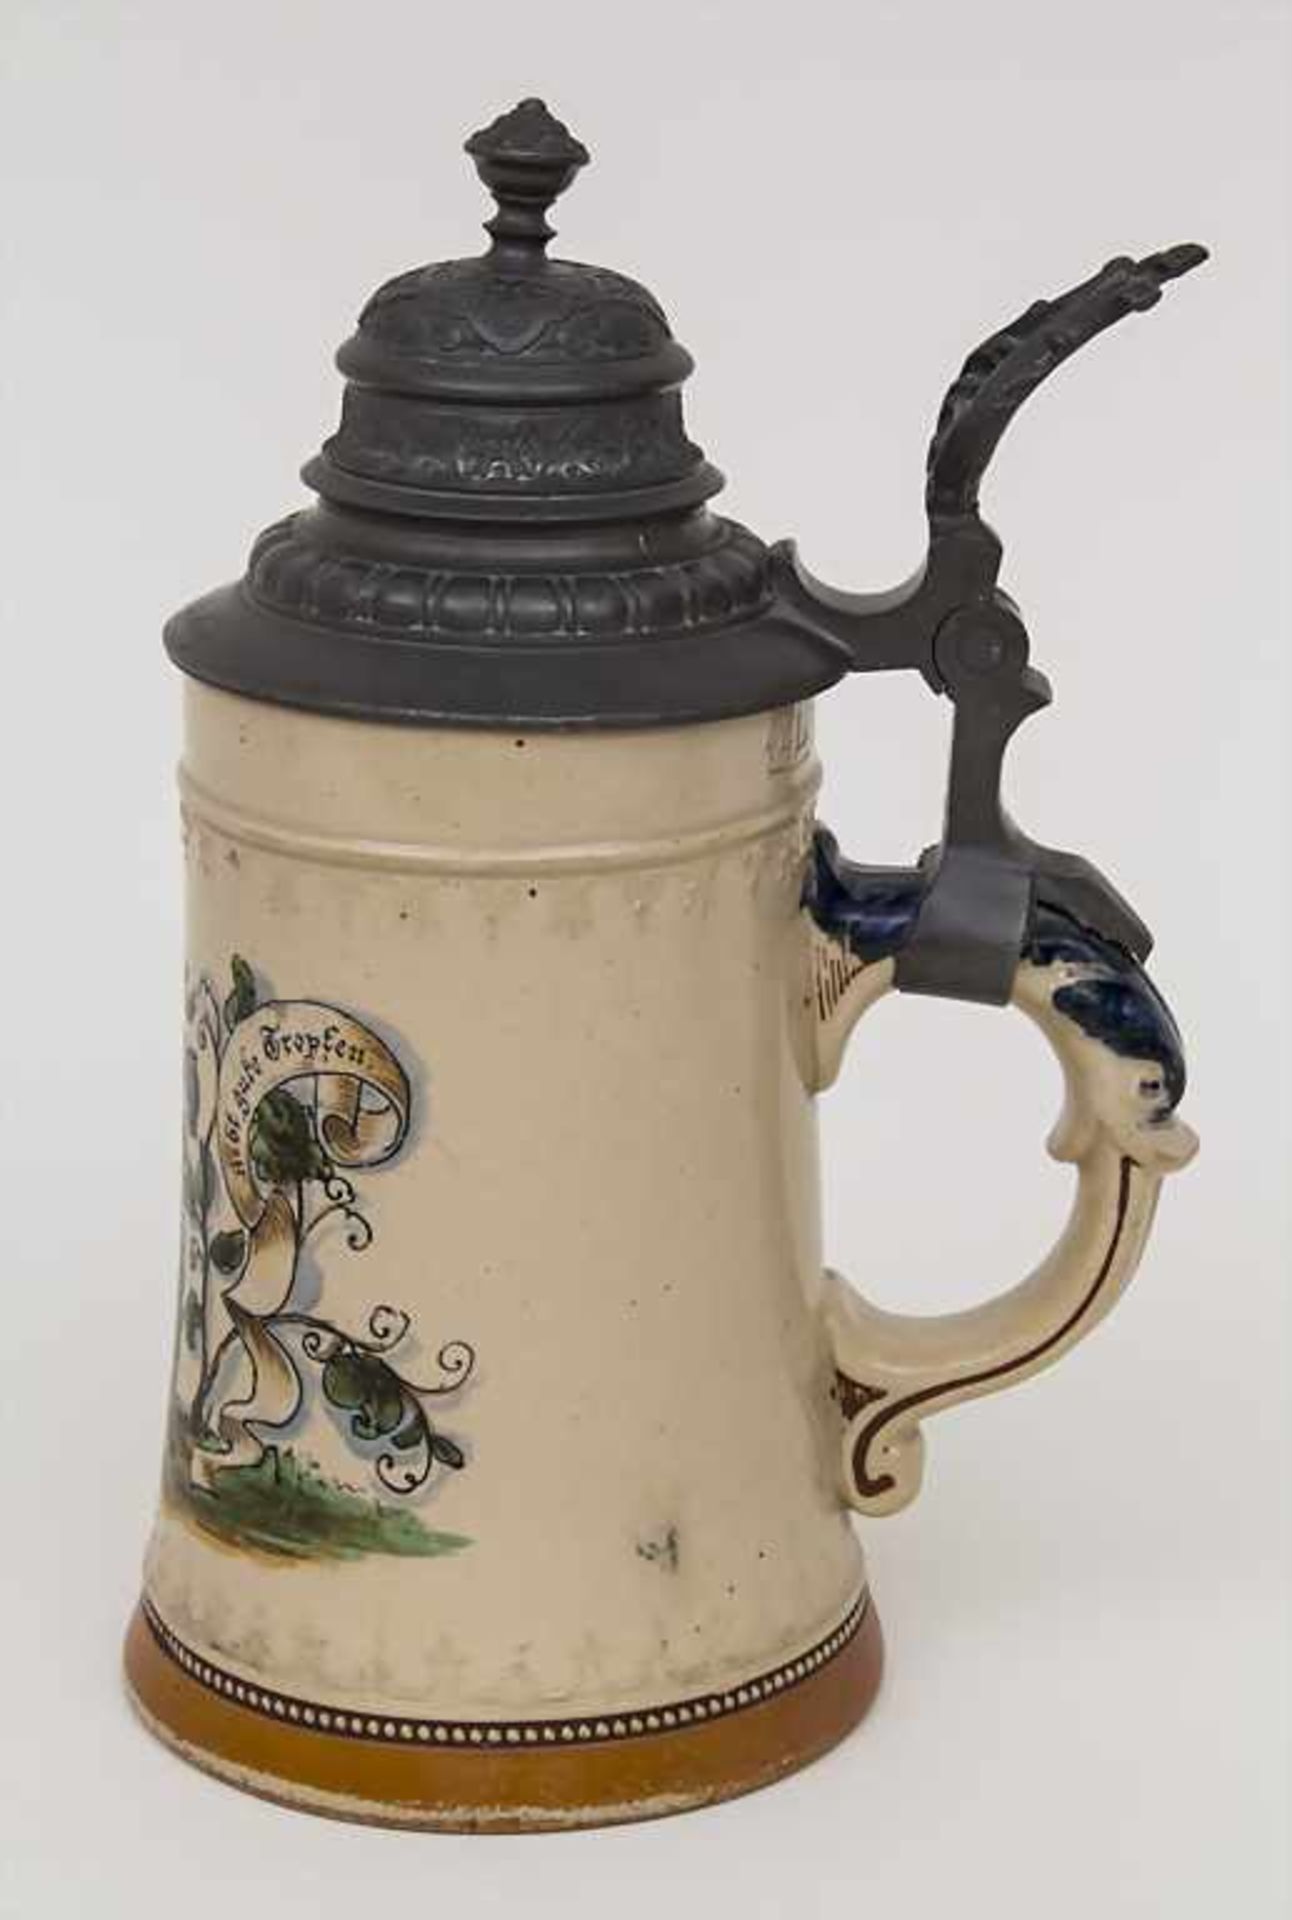 Bierkrug mit Figurendekor / A beer mug, deutsch, Ende 19. Jh. Material: Keramik, polychrom bemalt, - Bild 2 aus 5